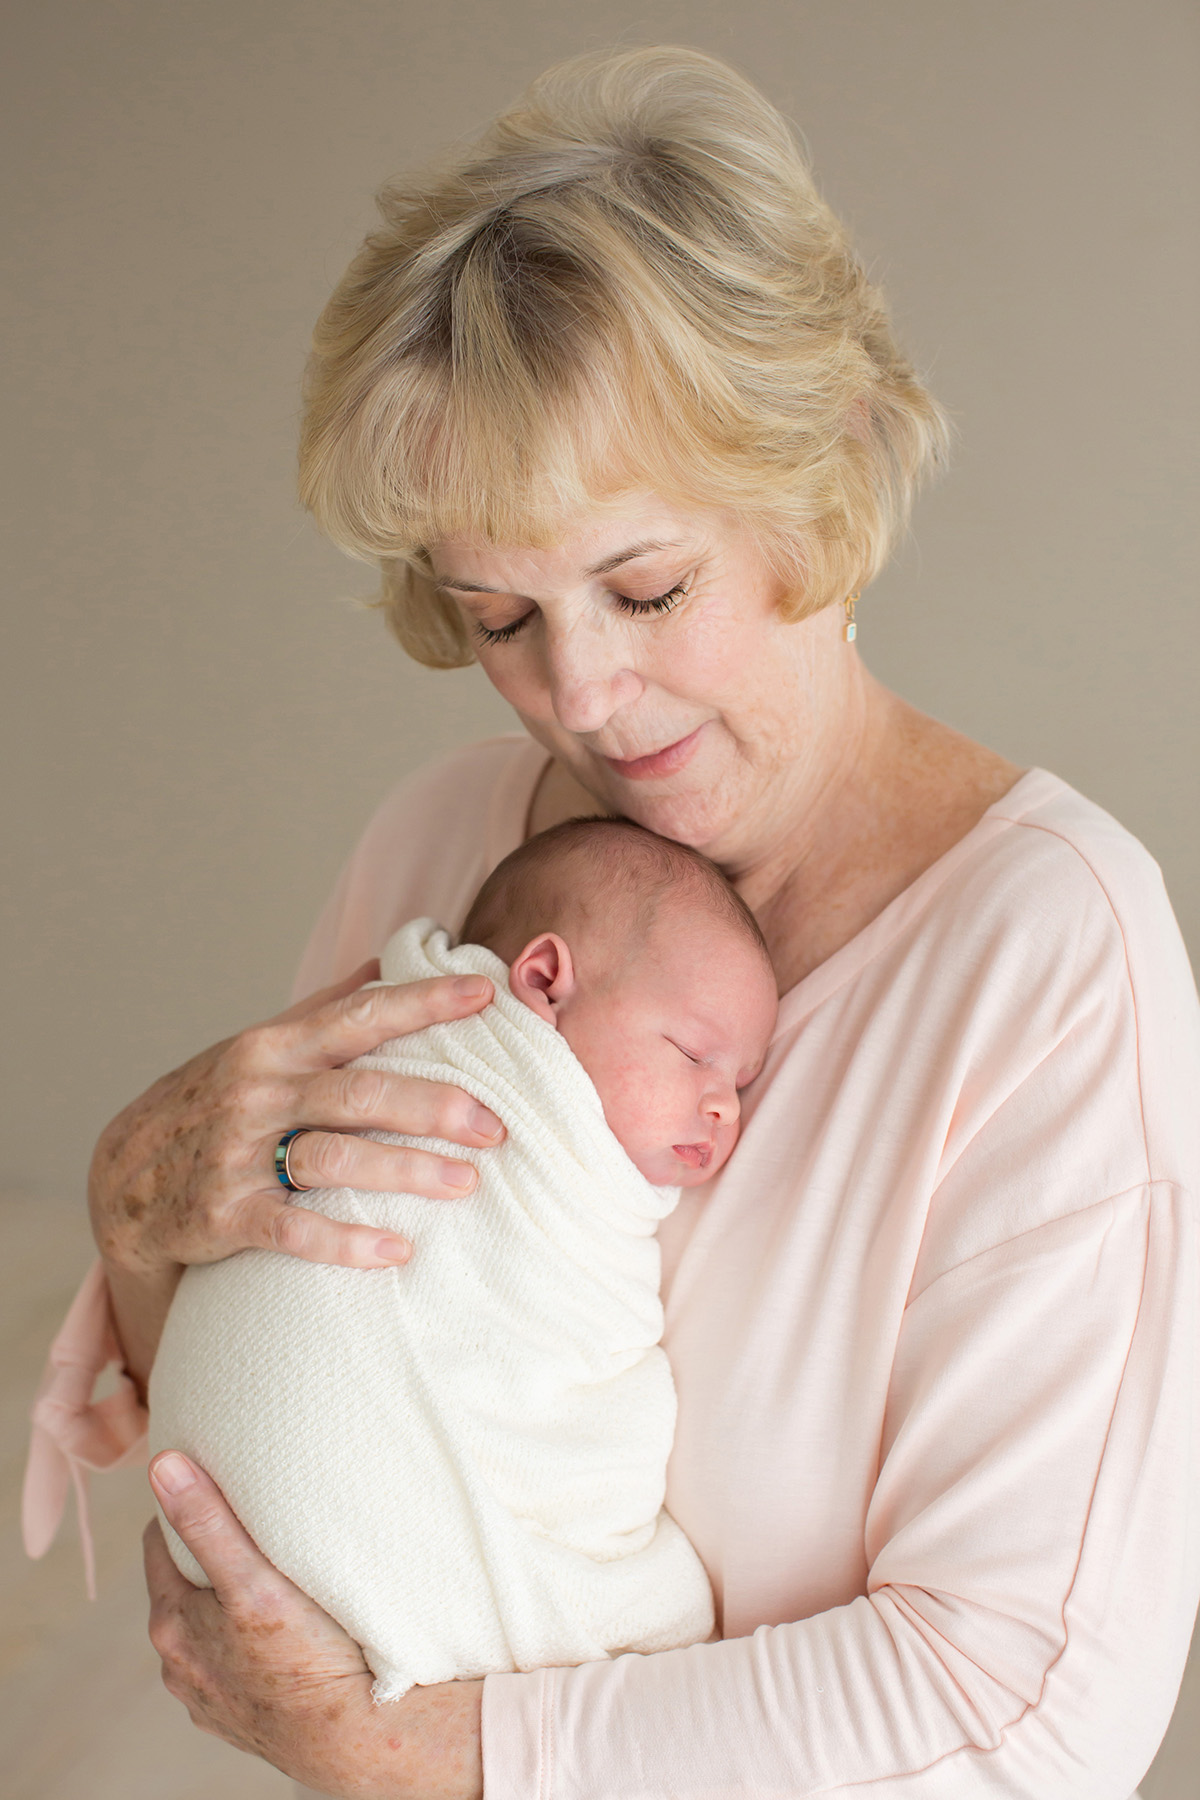 Louisvlle Newborn Photographer | Julie Brock Photography | Maternity | Family | Grandmother holding baby.jpg